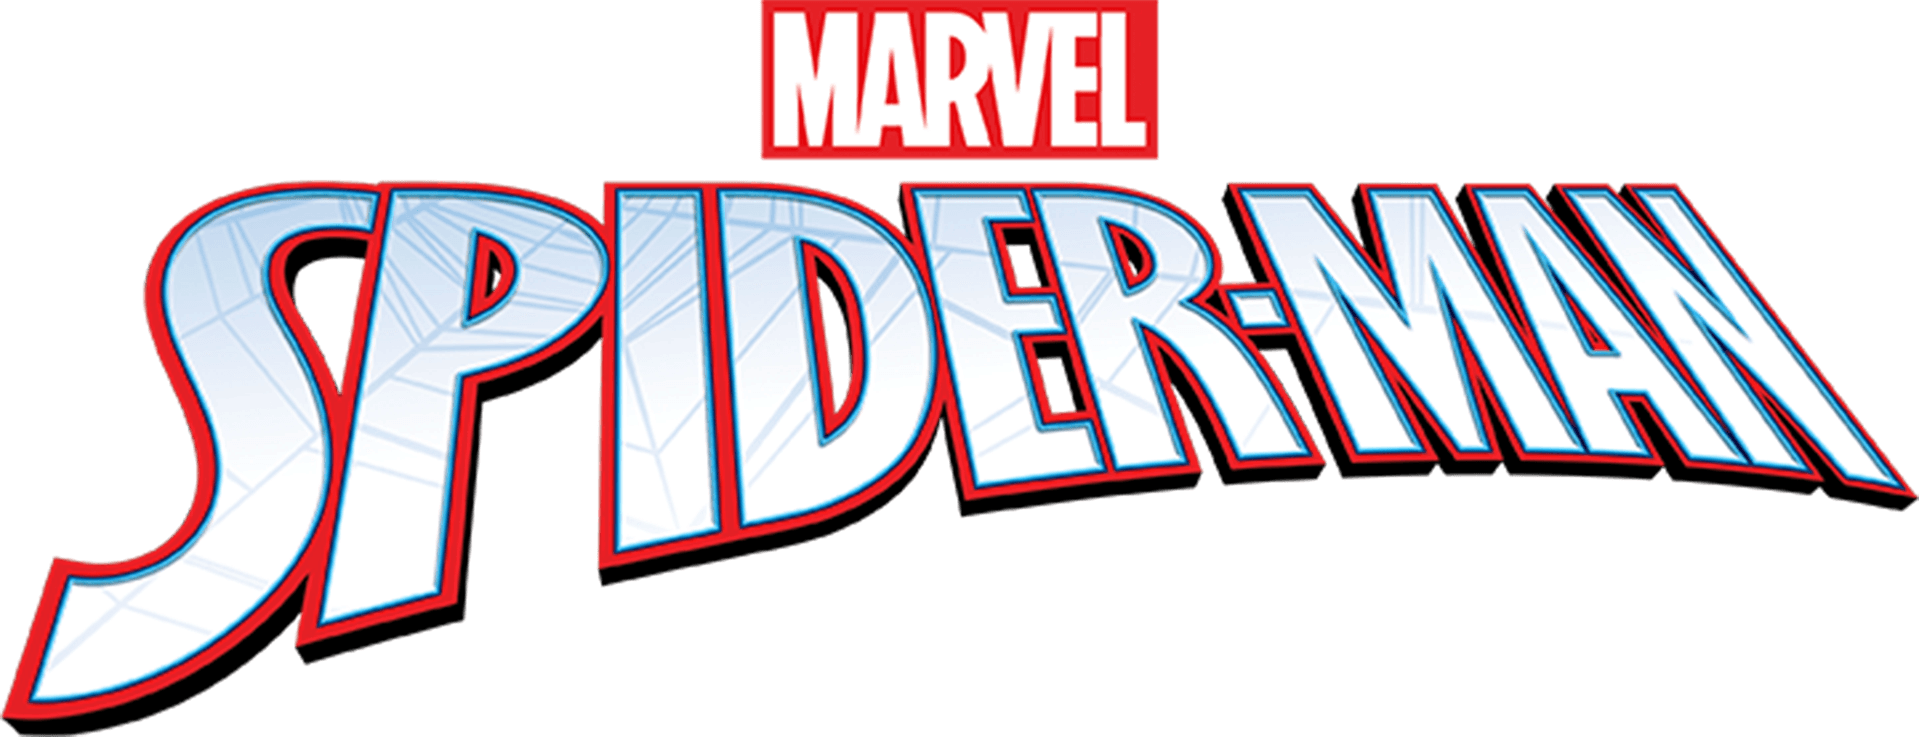 Marvel's Spider-Man logo